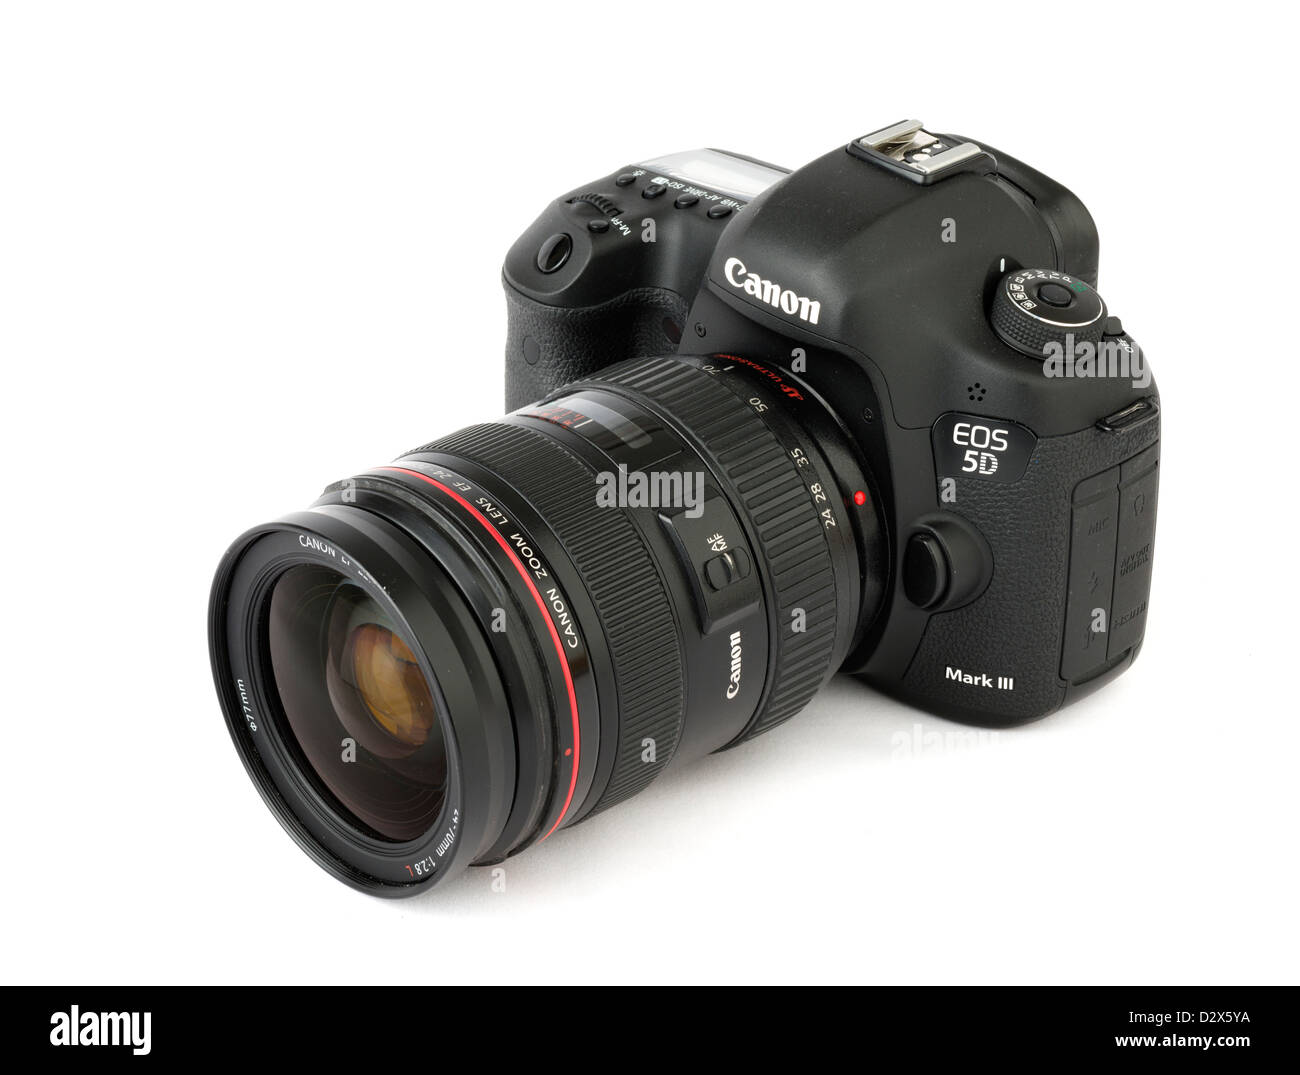 Una Canon EOS 5D Mark III cámara digital SLR con objetivo Canon EF 24-70mm f/2.8L lentes de zoom Foto de stock